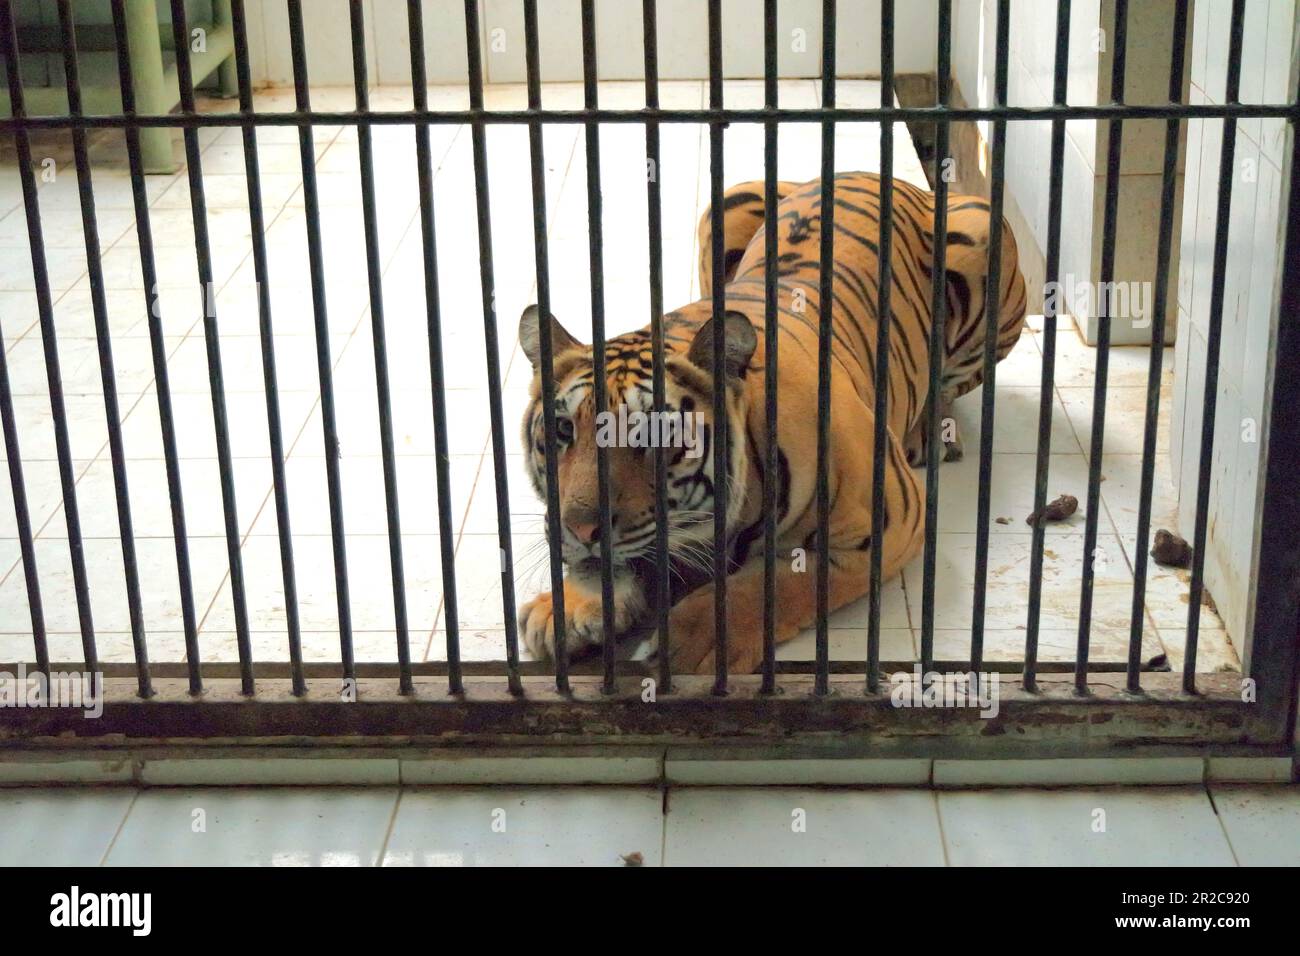 A Sumatran tiger (Panthera tigris sondaica) at the veterinary facility managed by Bali Zoo in Singapadu, Sukawati, Gianyar, Bali, Indonesia. Stock Photo